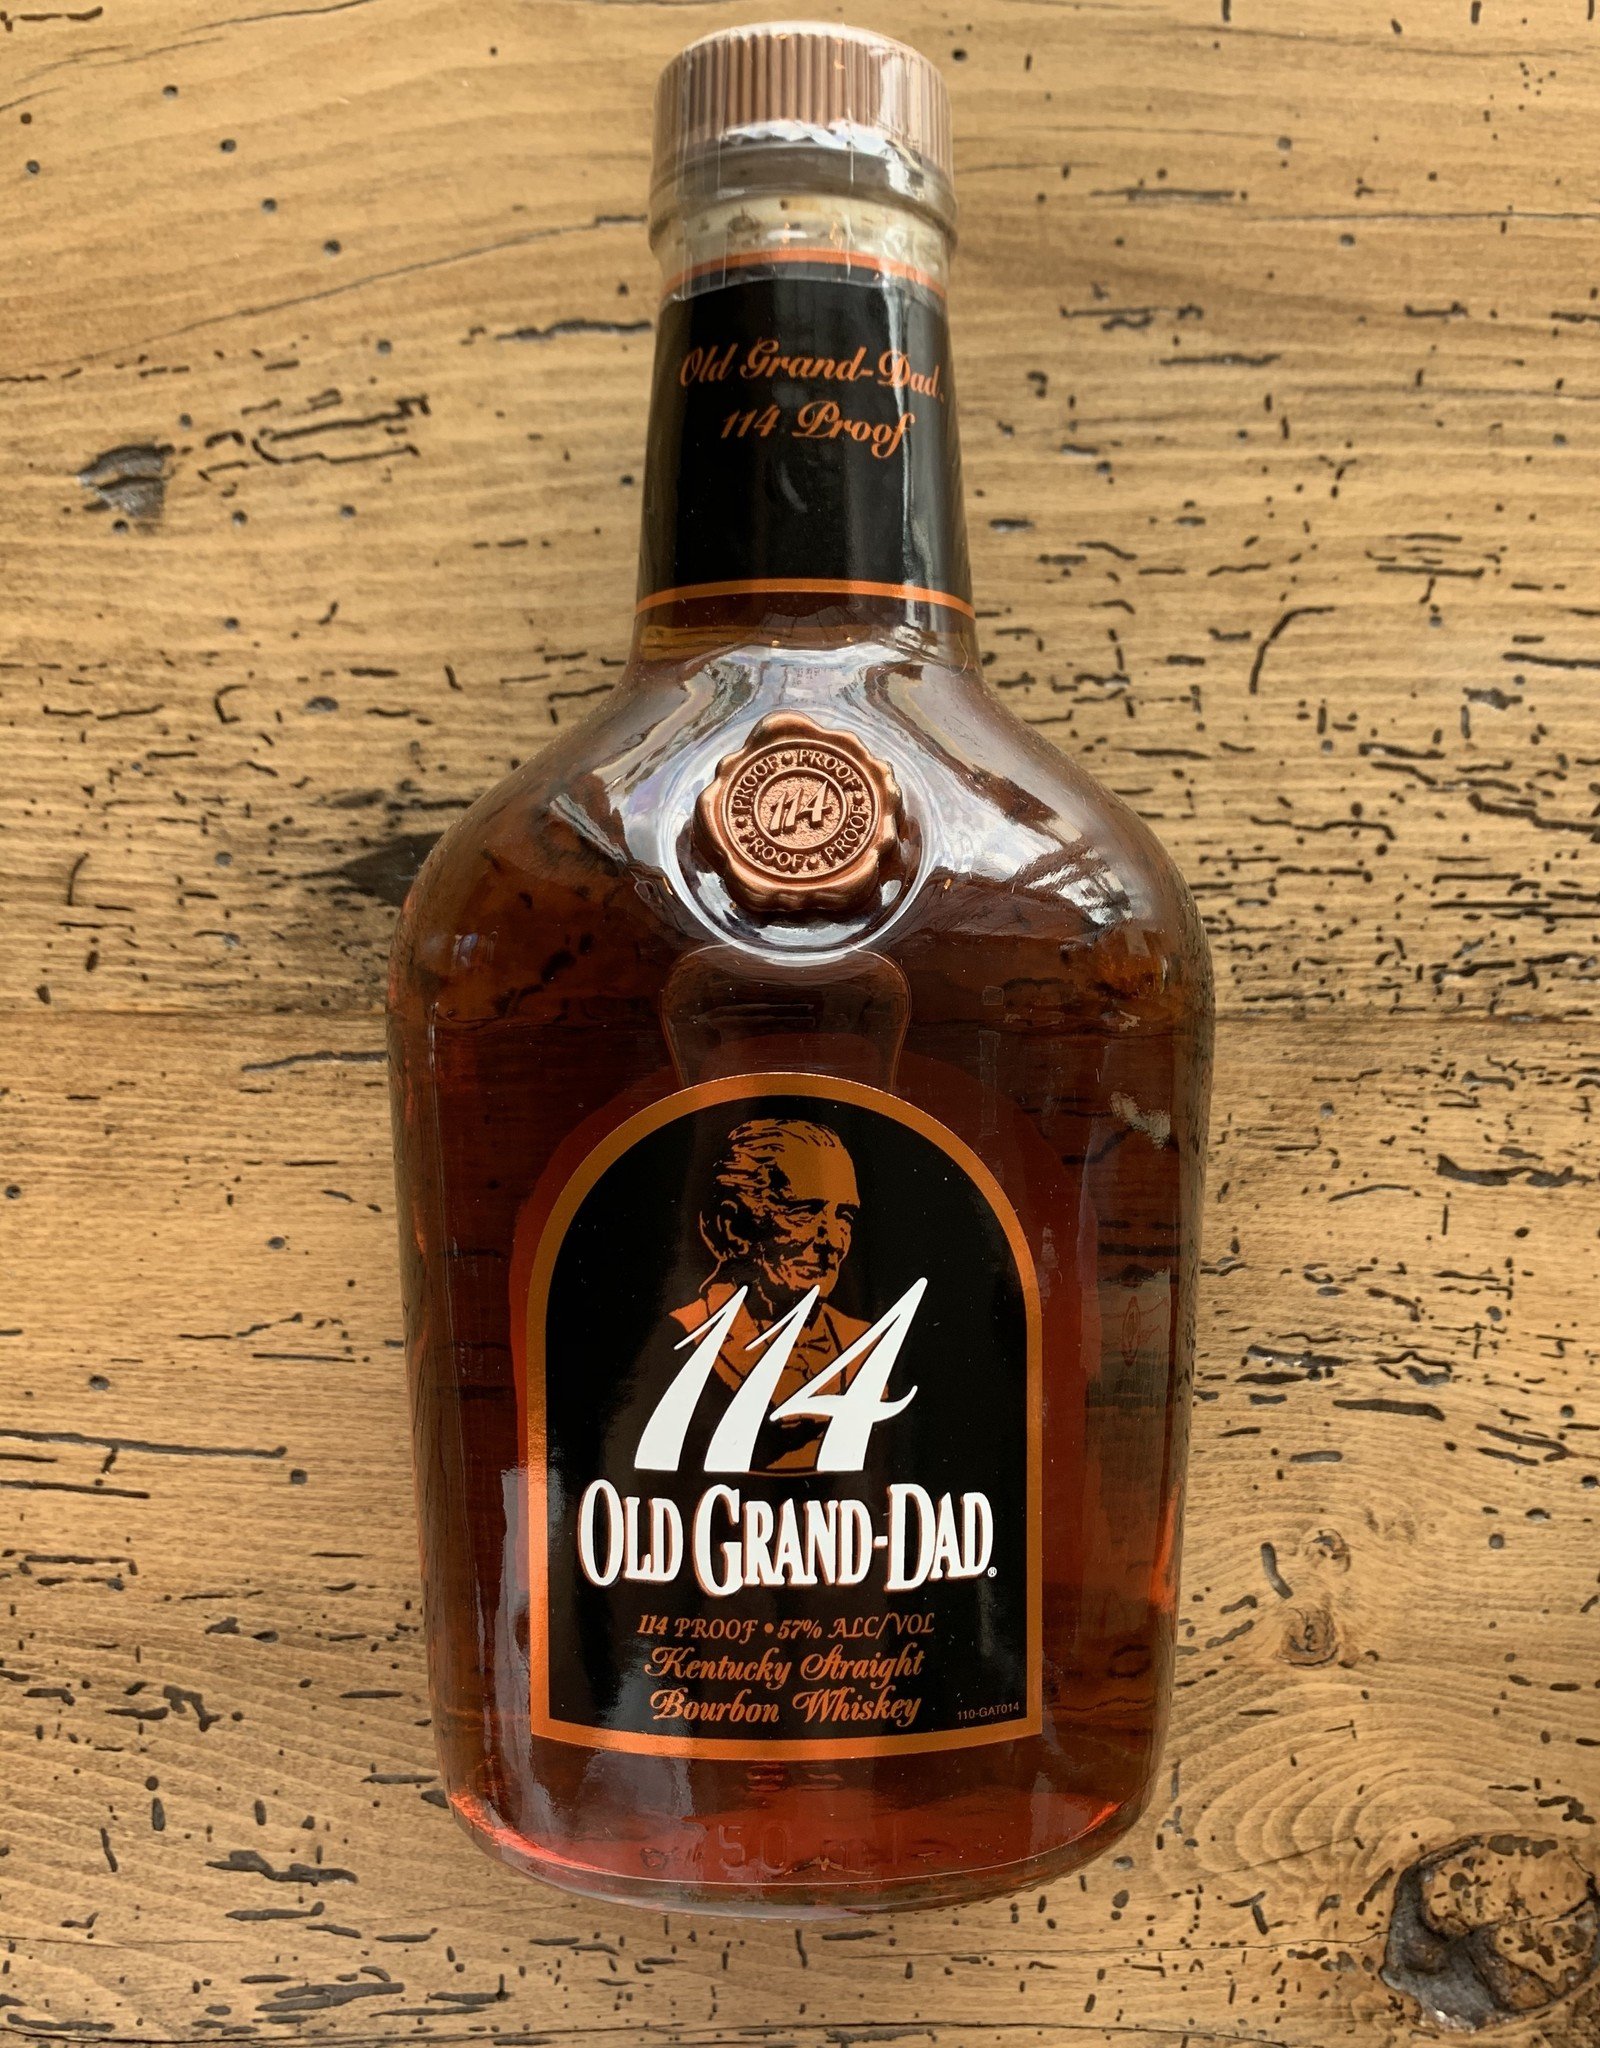 Old Granddad 114 Proof Bourbon